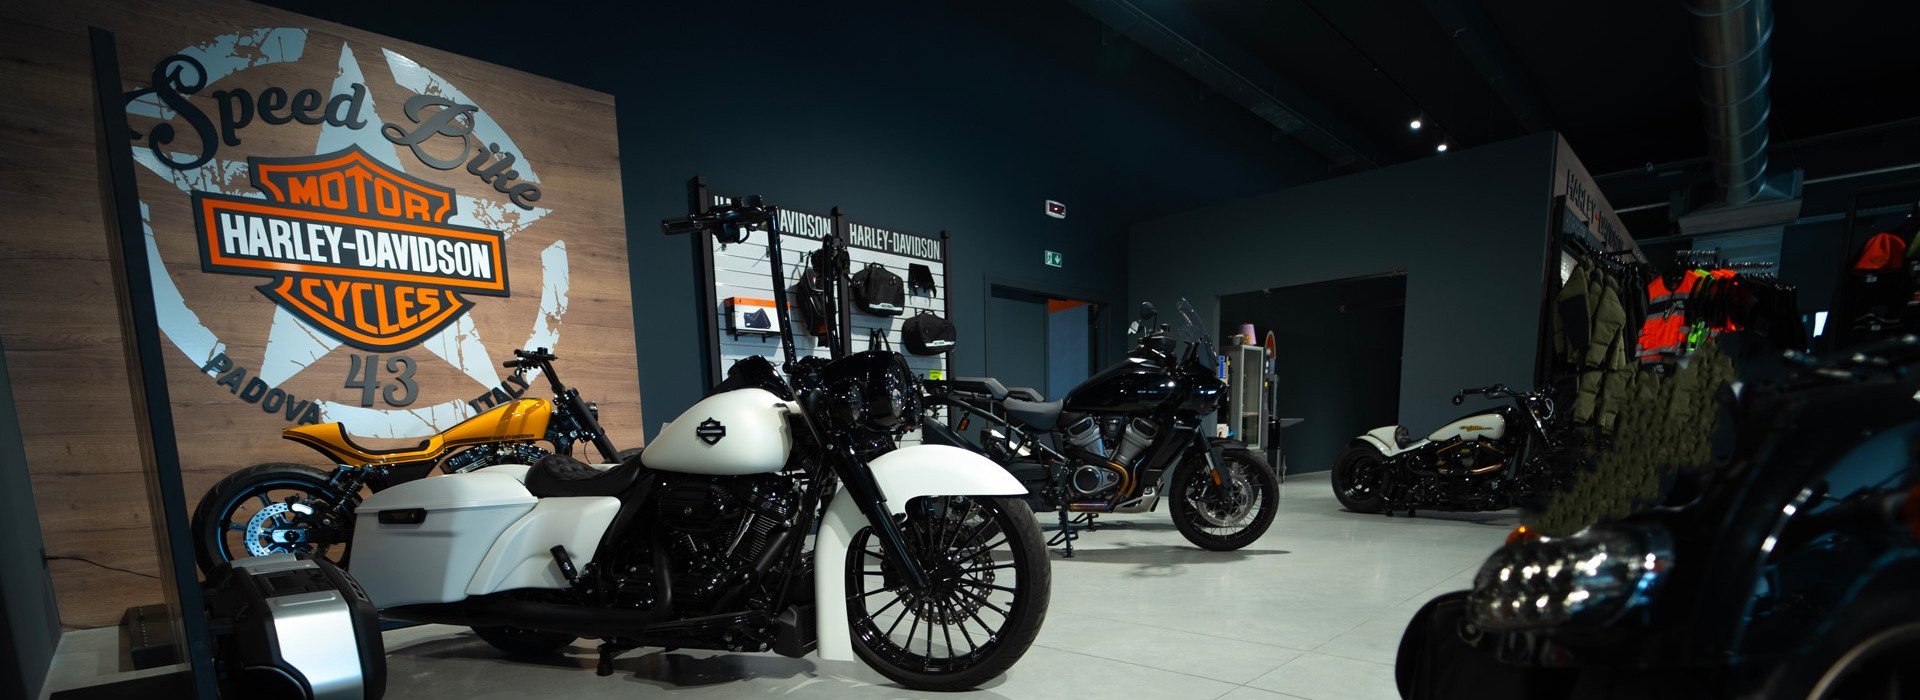 Moto - Harley Davidson